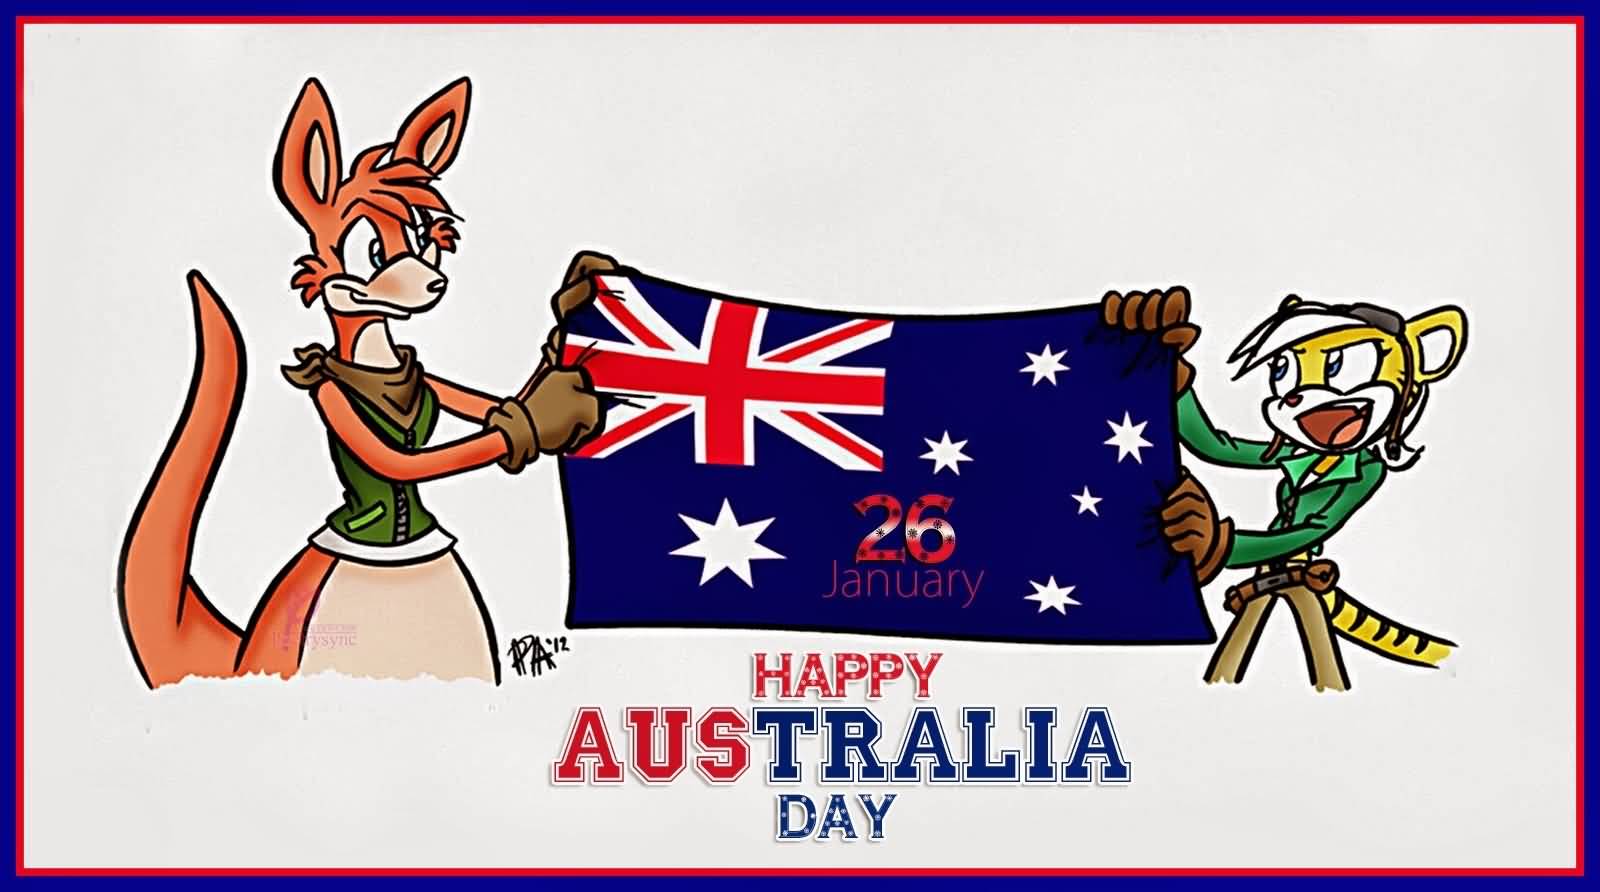 Happy Australia Day 26 Janaury Cartoon Picture